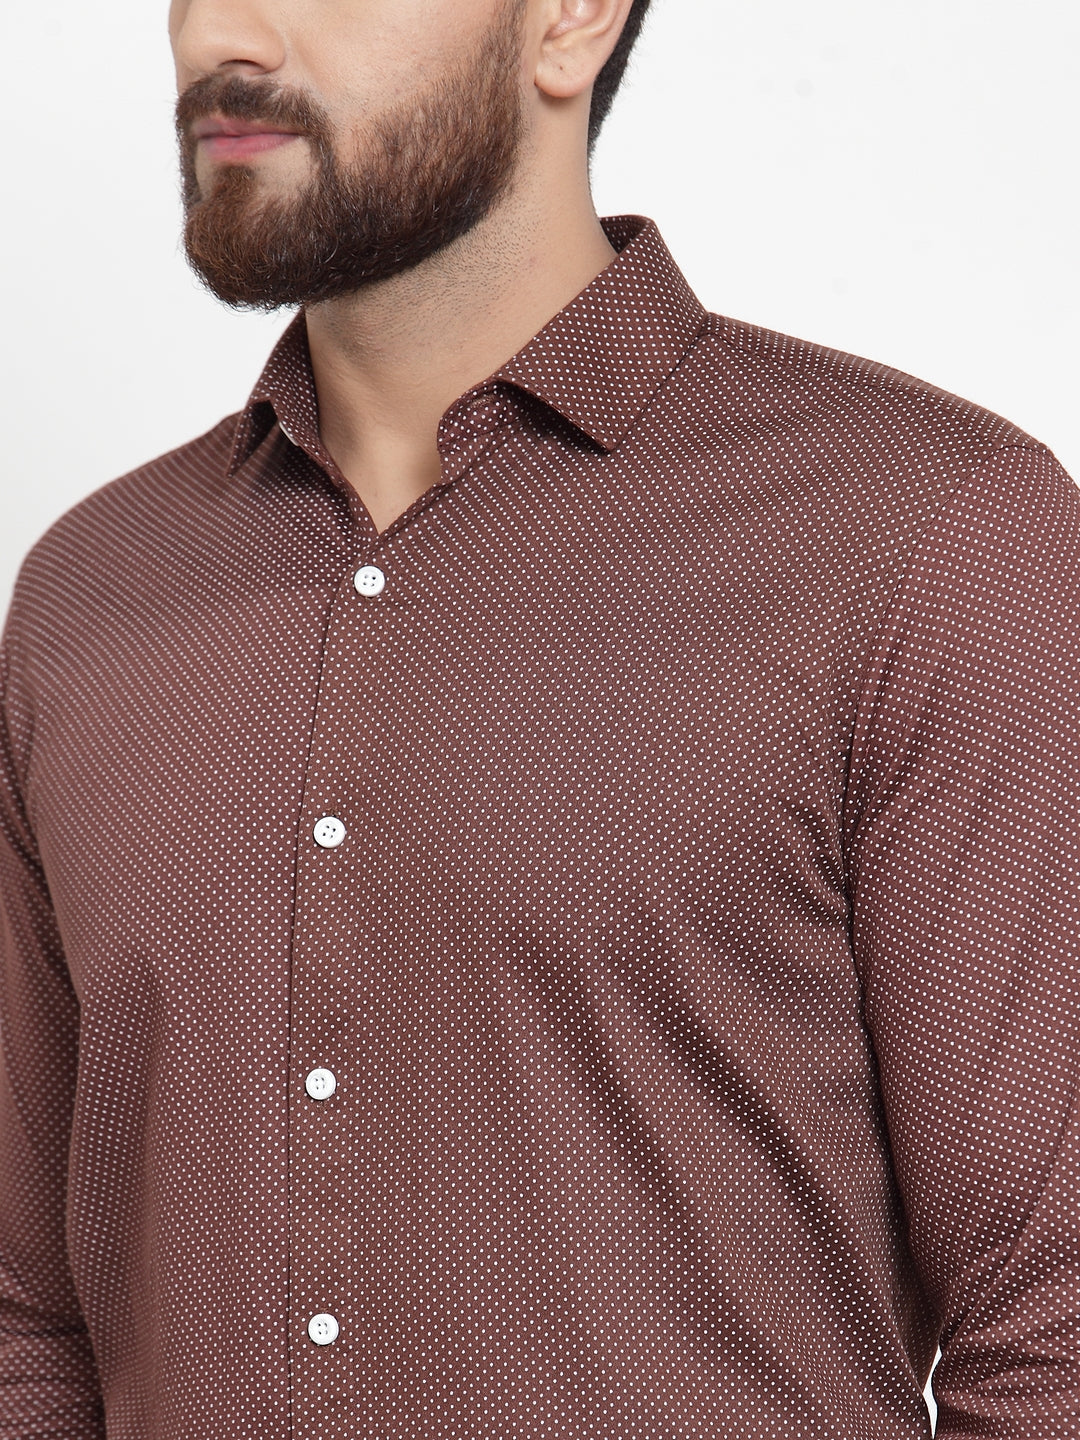 Men's Brown Cotton Polka Dots Formal Shirts ( SF 736Coffee ) - Jainish